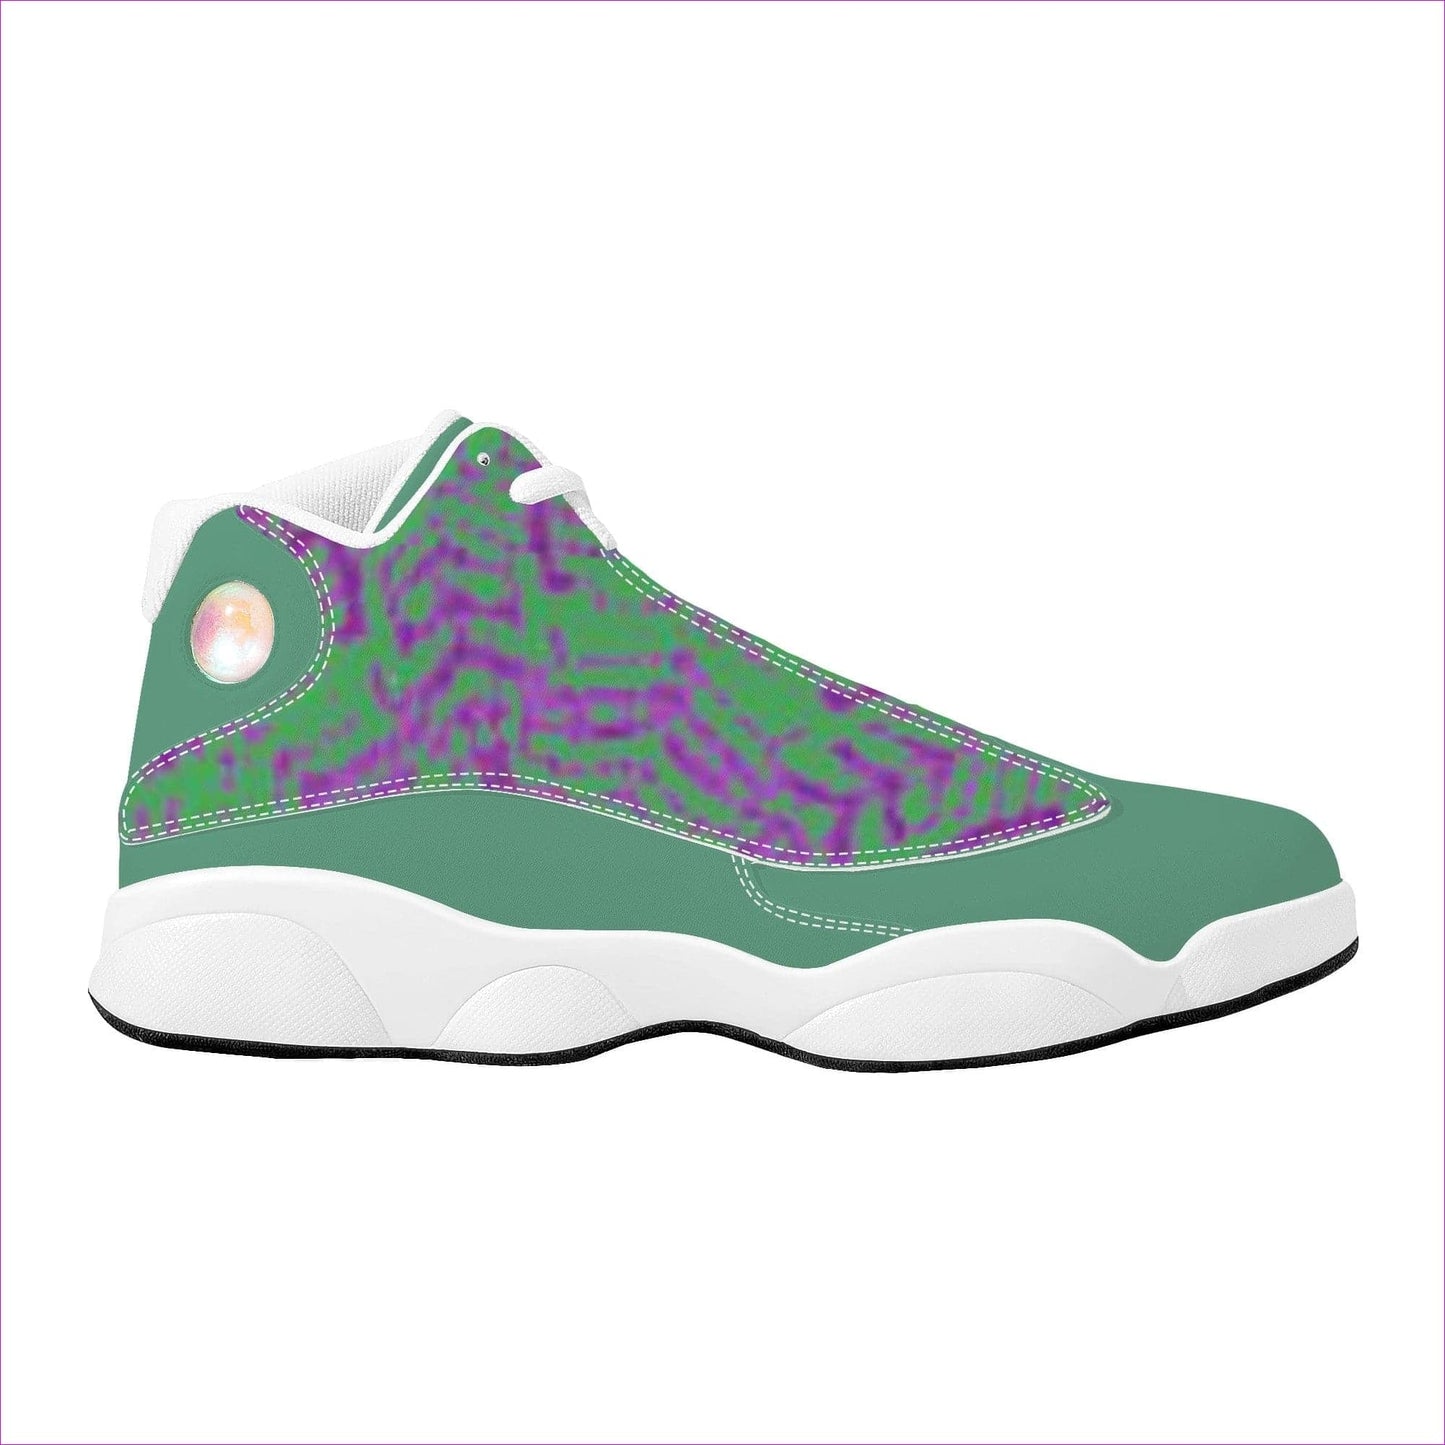 Chameleon Snake Basketball Shoes - unisex basketball shoes at TFC&H Co.